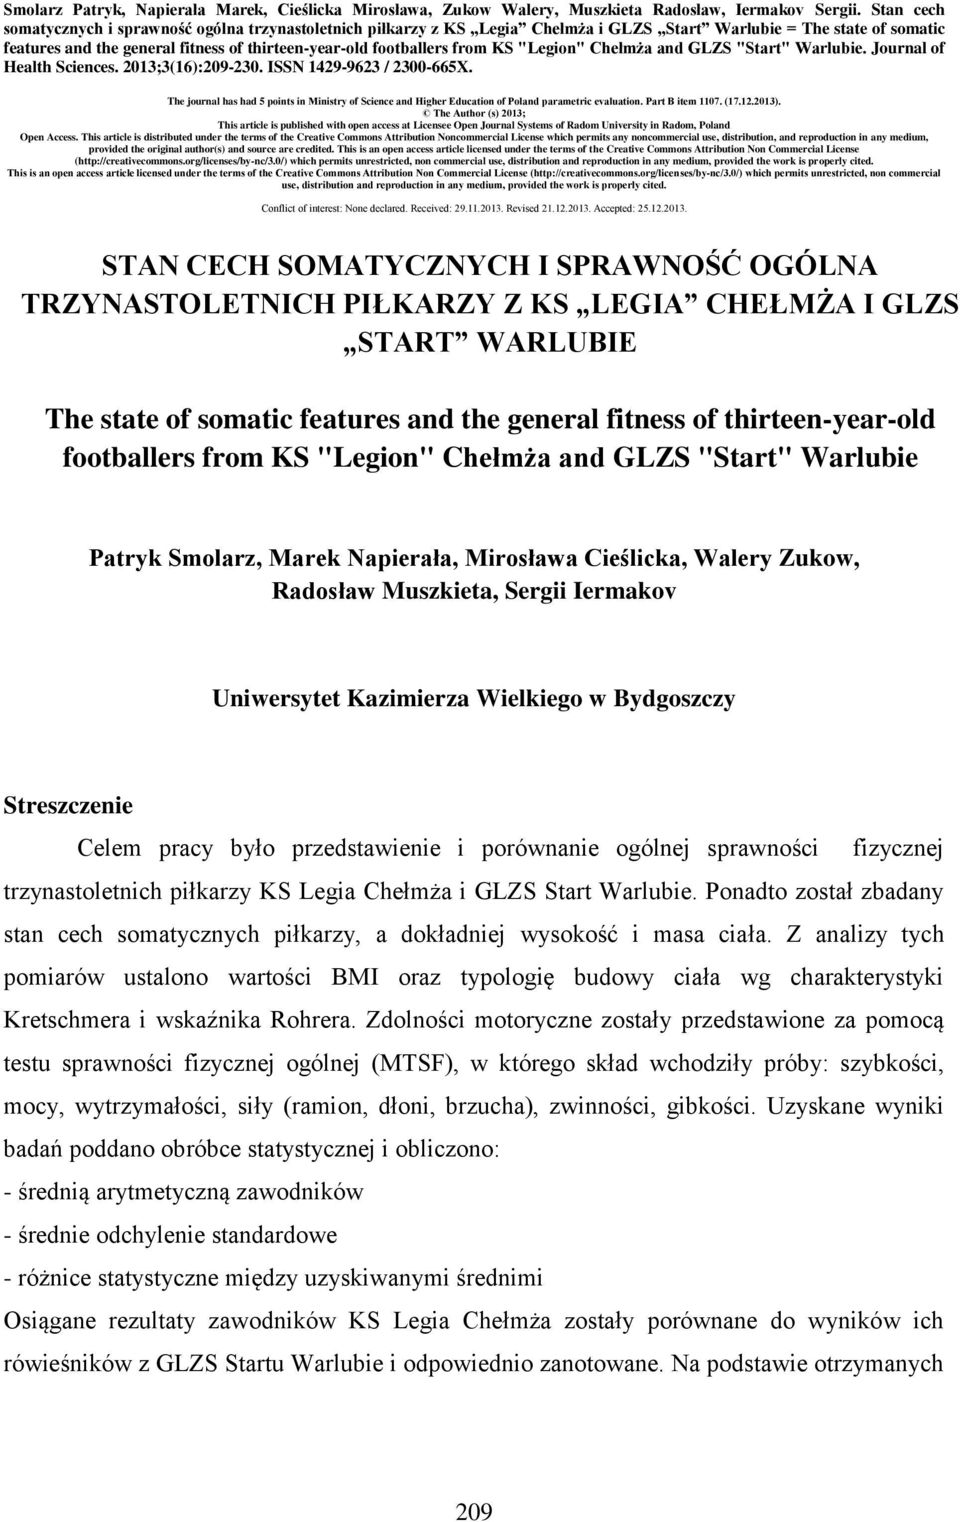 from KS "Legion" Chełmża and GLZS "Start" Warlubie. Journal of Health Sciences. 2013;3(16):209-230. ISSN 1429-9623 / 2300-665X.